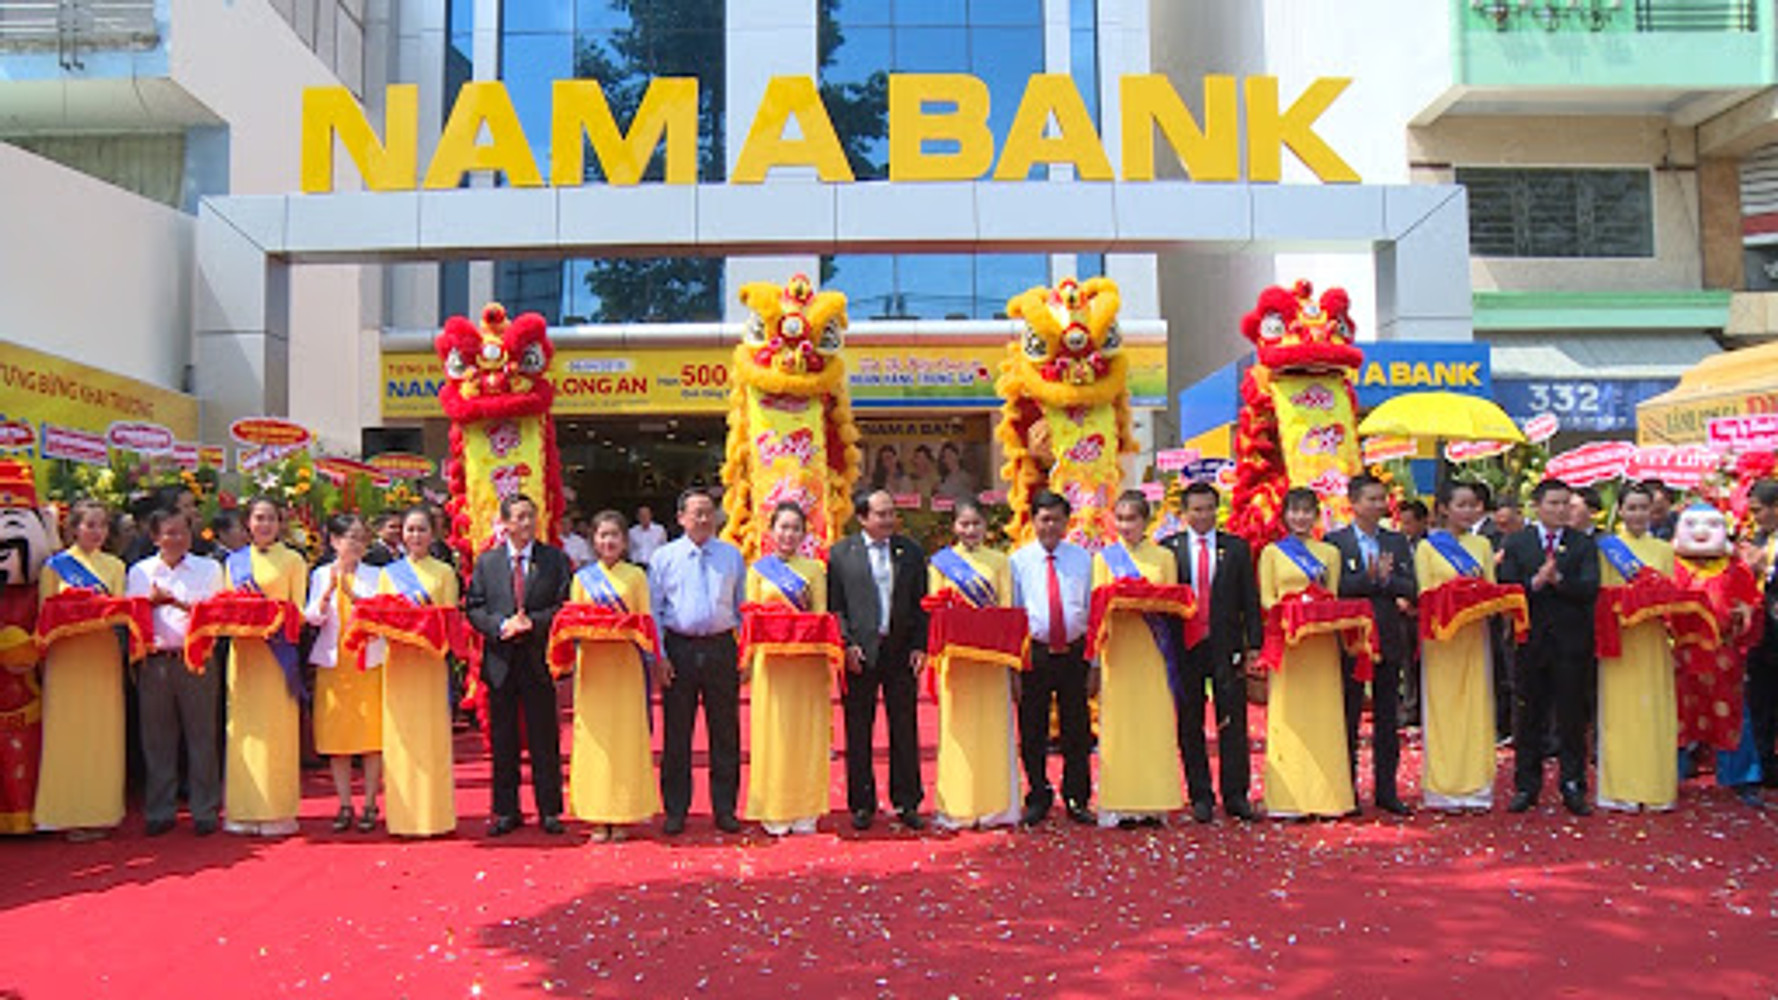 Nam Á Bank